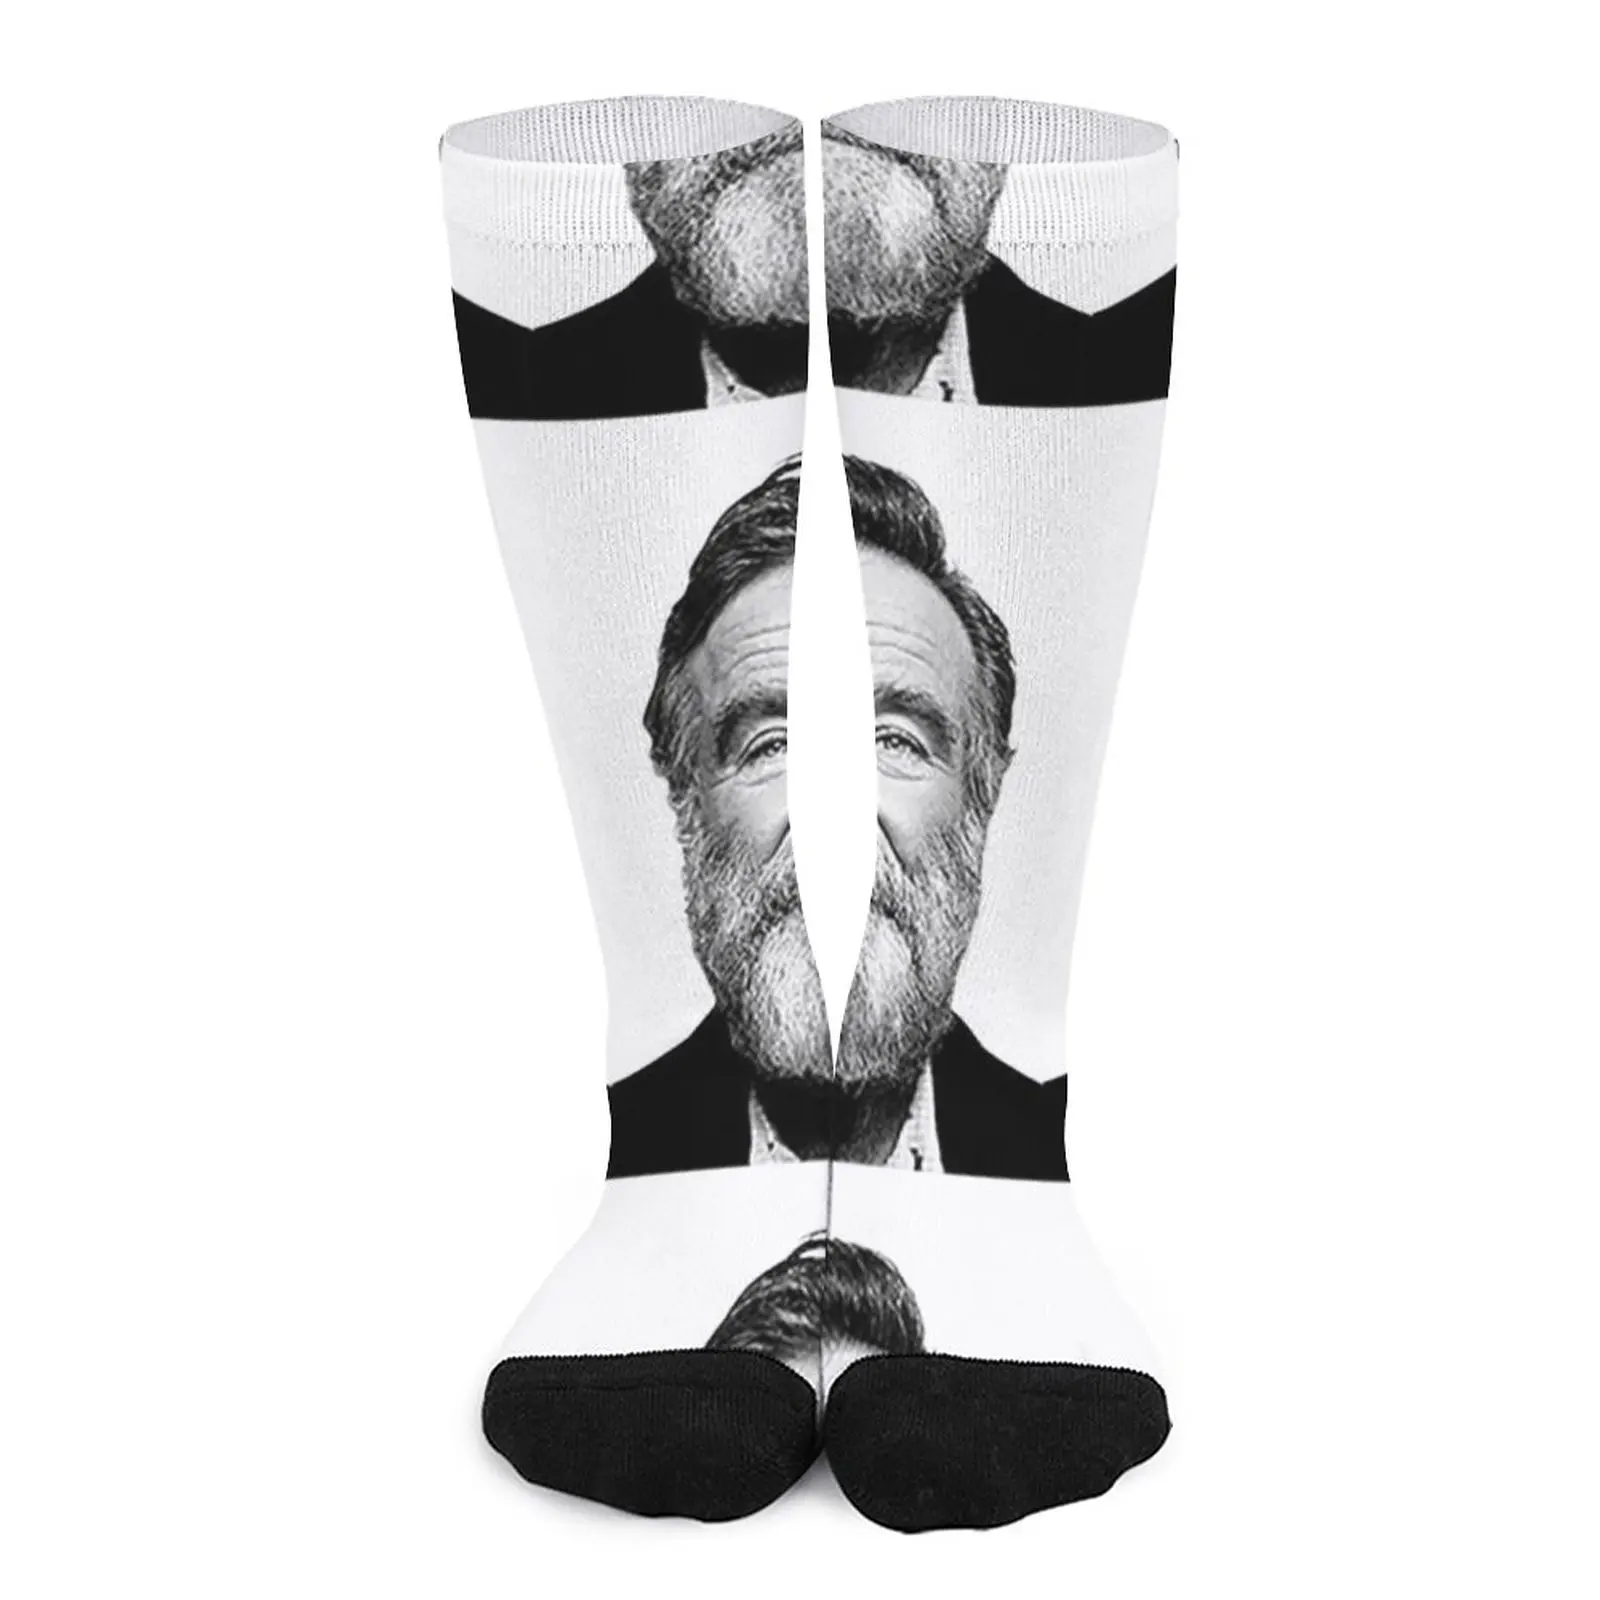 Robin Williams Socks Men's winter socks men socks winter socks men Stockings compression